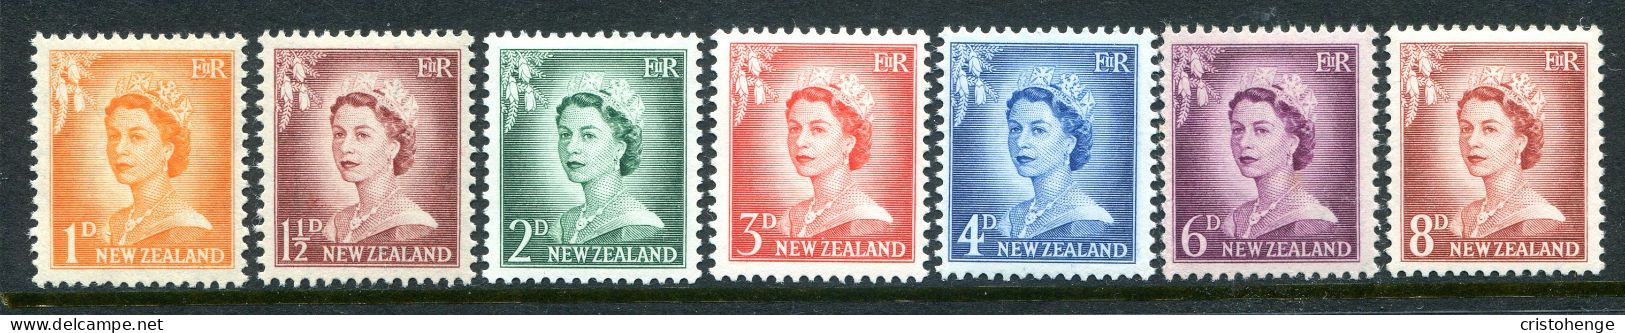 New Zealand 1955-59 QEII Large Figure Definitives Set MNH/LHM (SG 745-751) - Unused Stamps